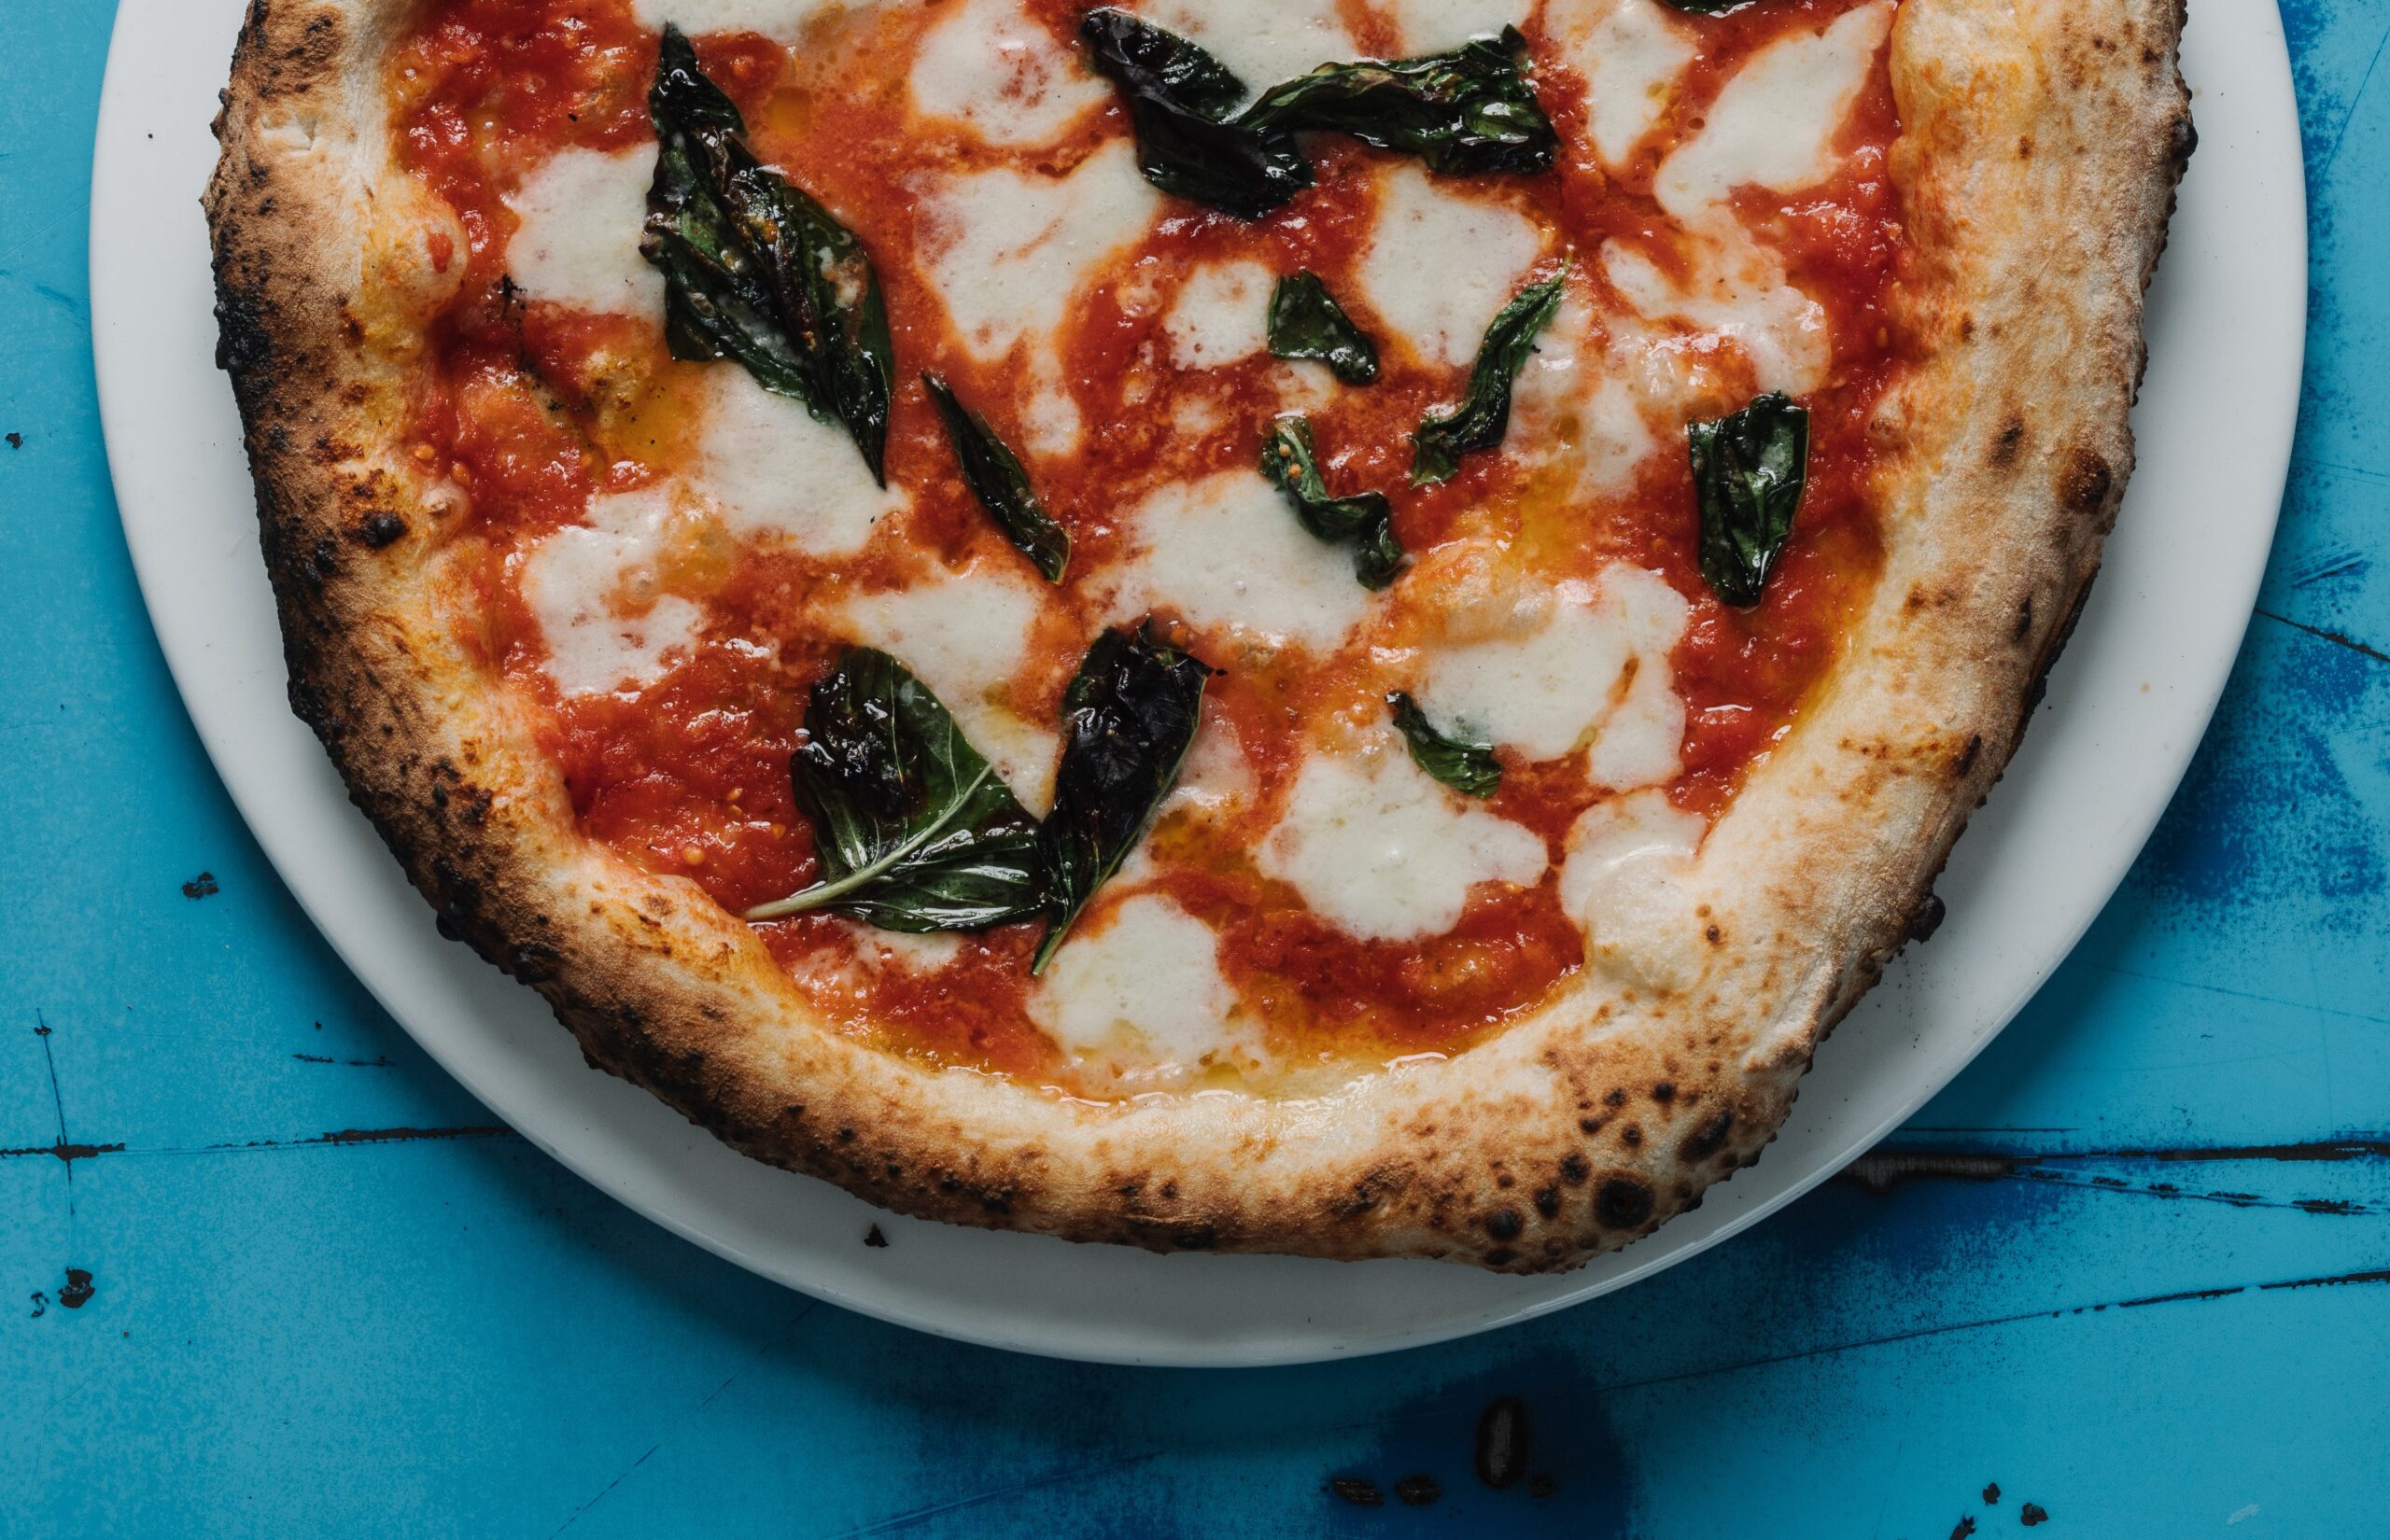 Varuni Napoli: Take A Slice of Pizza Pie History